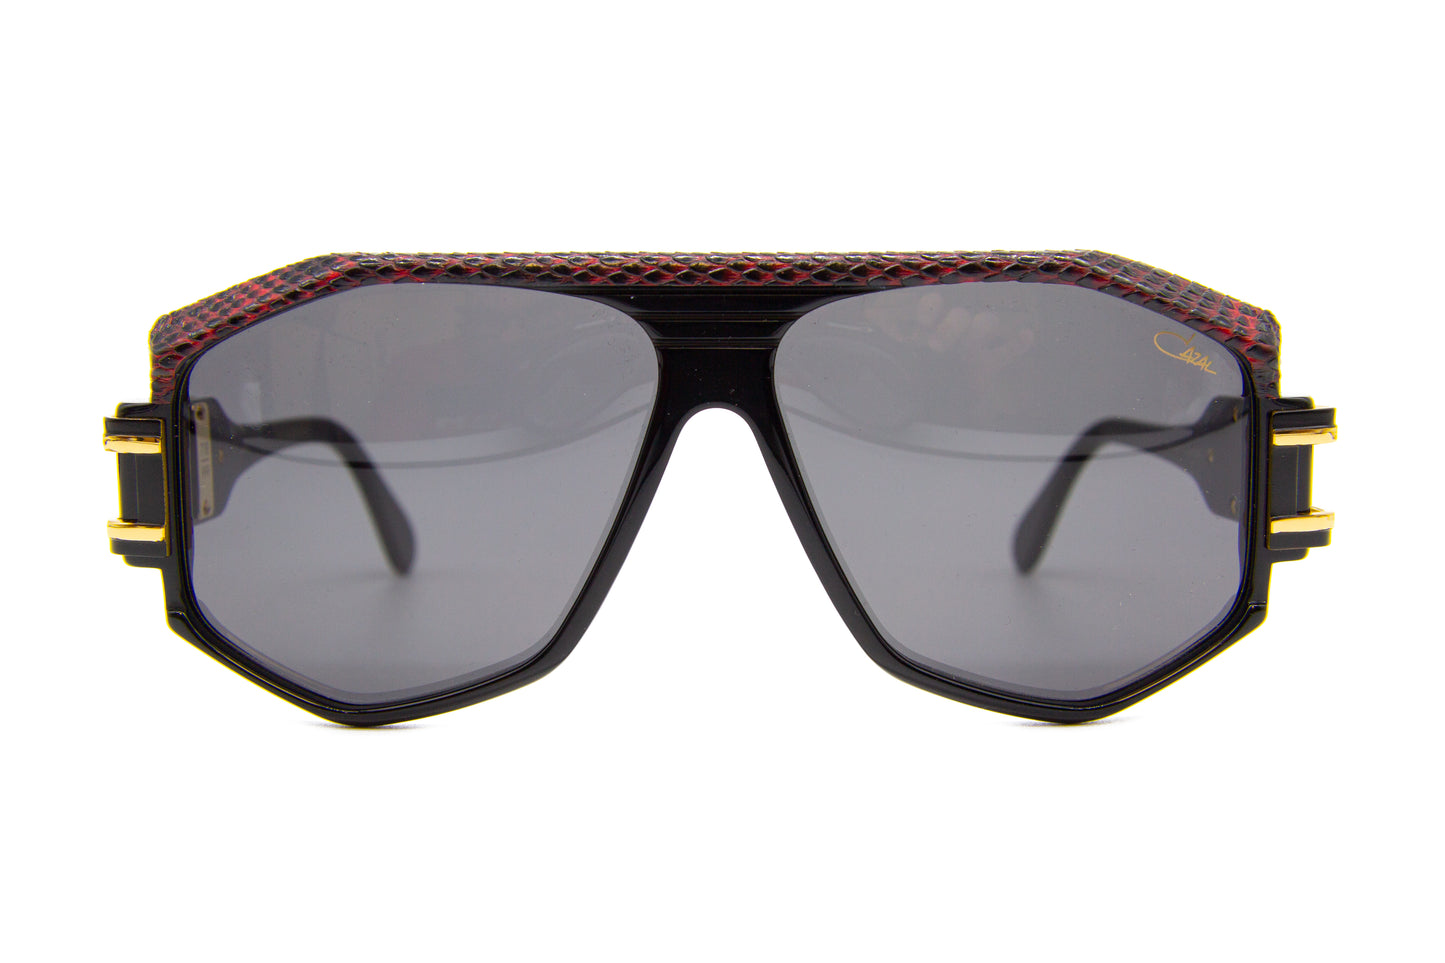 CAZAL - Legends - 163-3 - 702 - Germany - Sunglasses